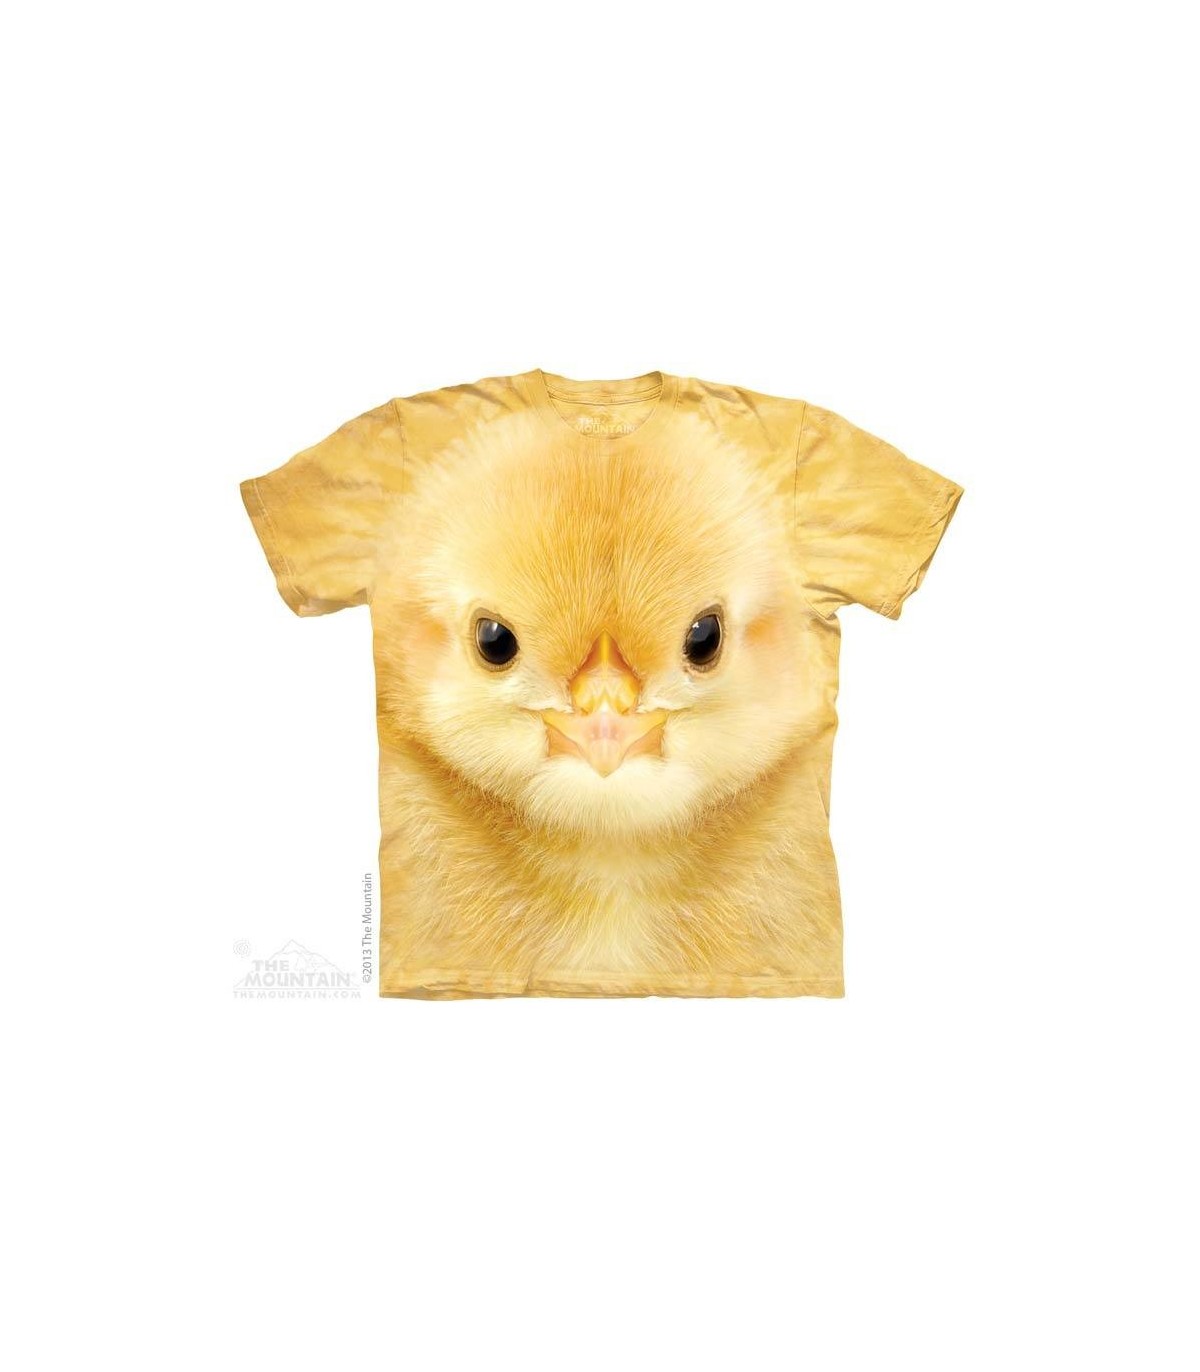 Big Face Baby Chick - Bird T Shirt The Mountain